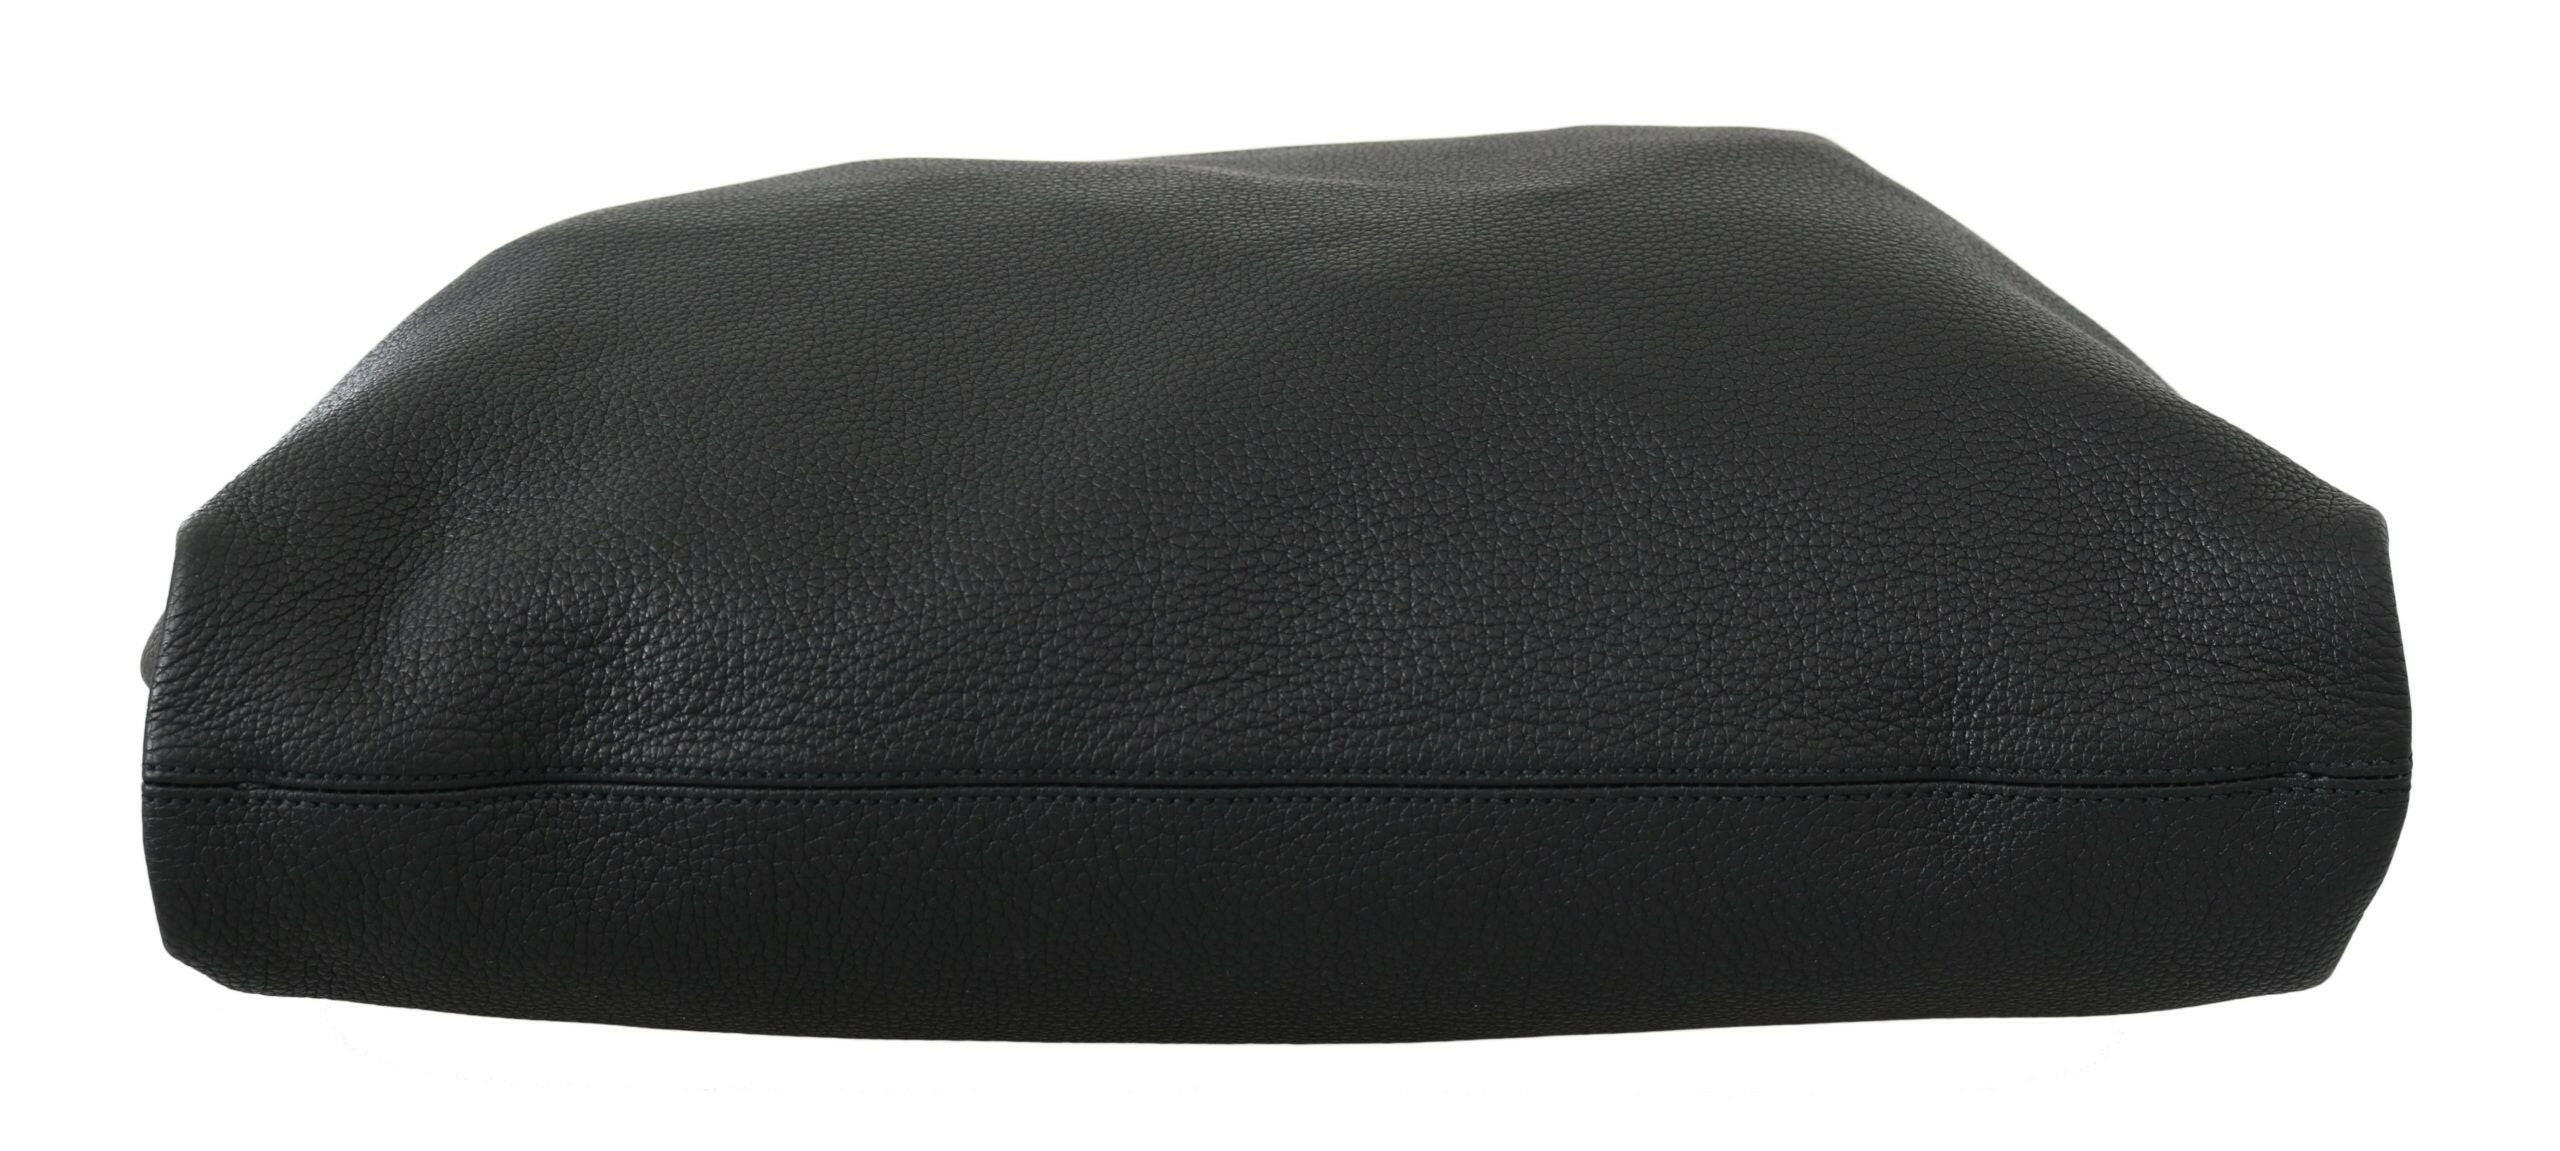 Dolce & Gabbana Black Leather Travel Shopping Gym #DGFAMILY Tote Bag - GENUINE AUTHENTIC BRAND LLC  